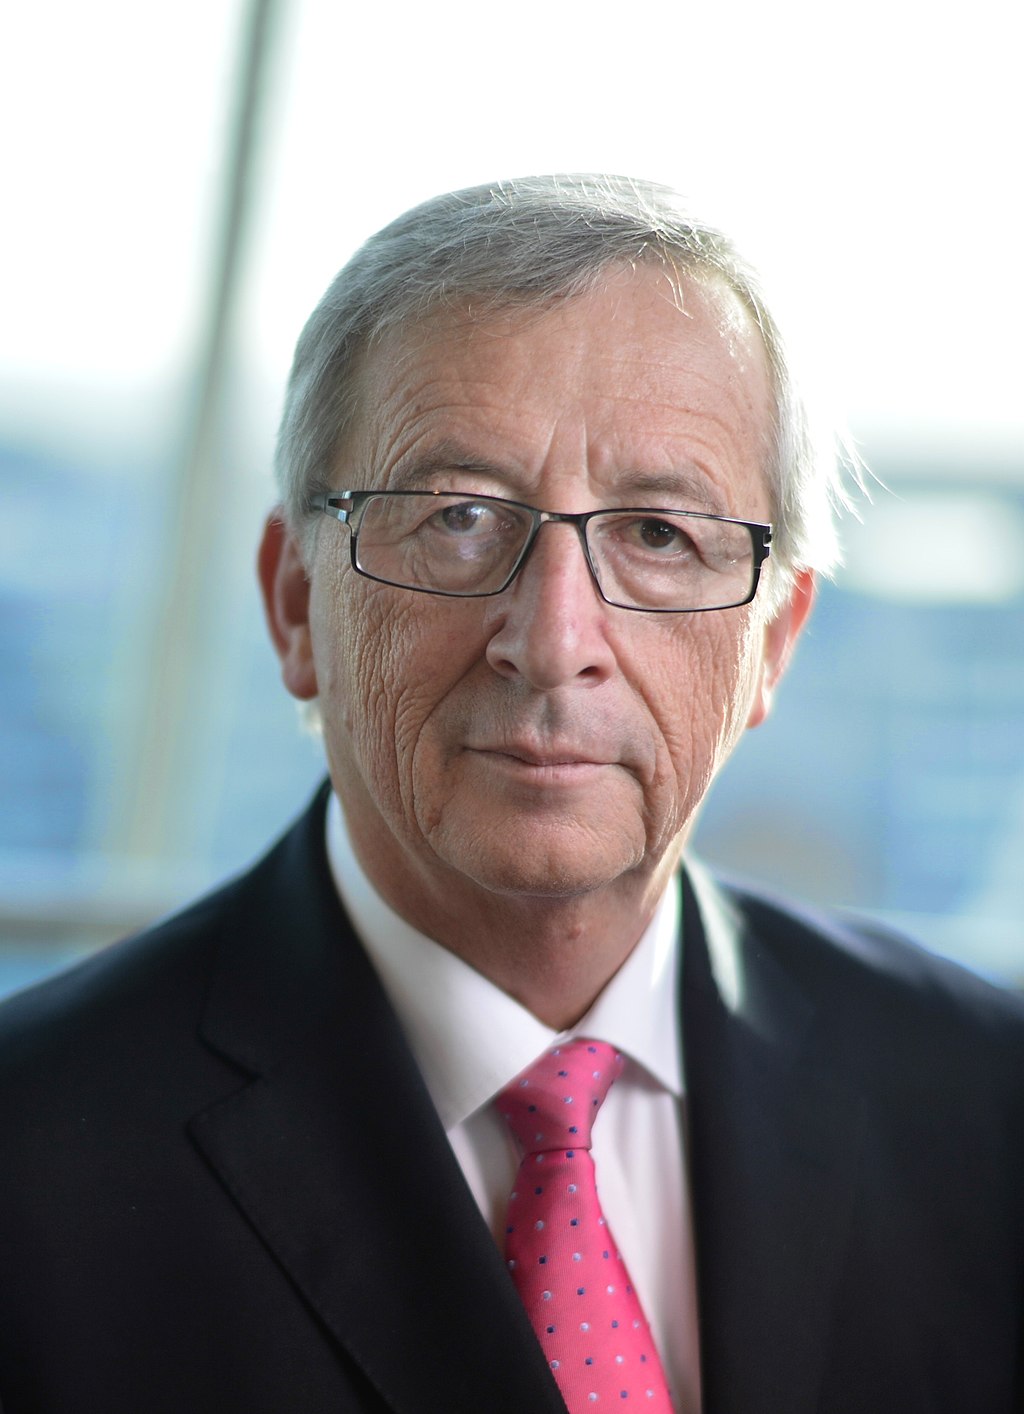 Ioannes Claudius Juncker die 7 Martis 2014